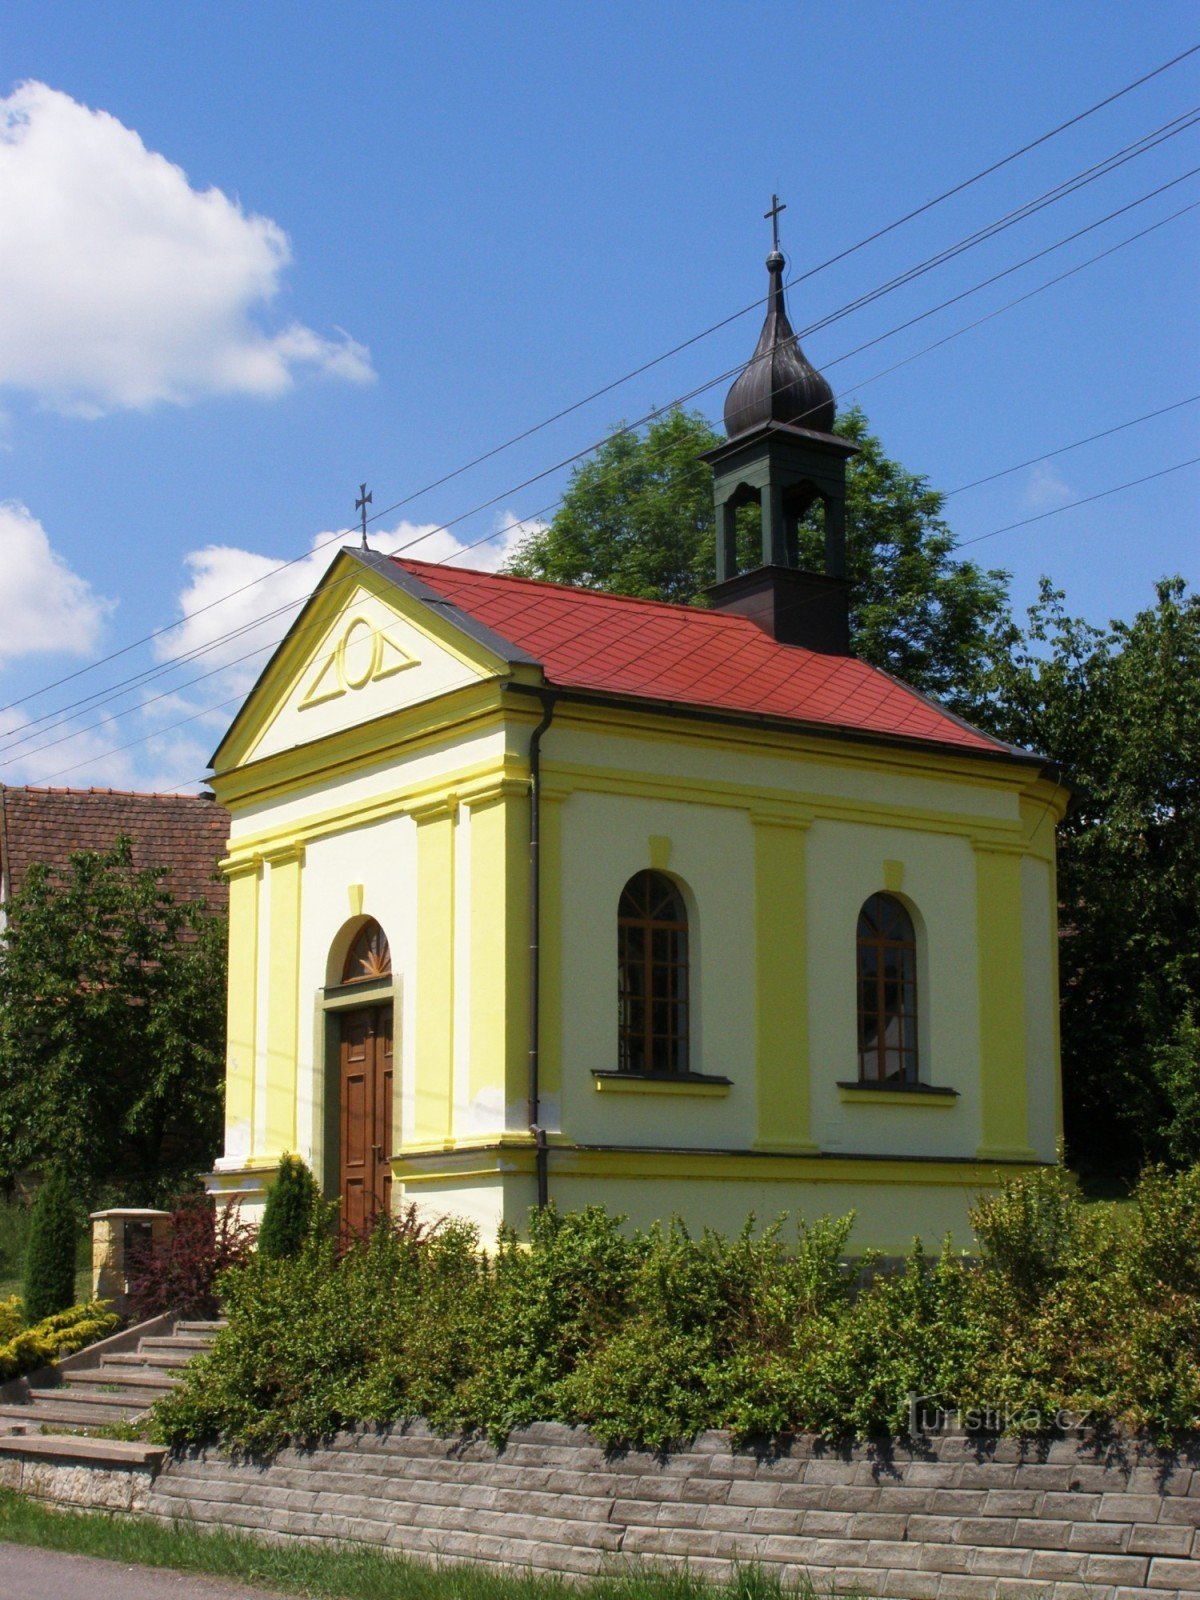 Slemeno - kapel van St. Joseph